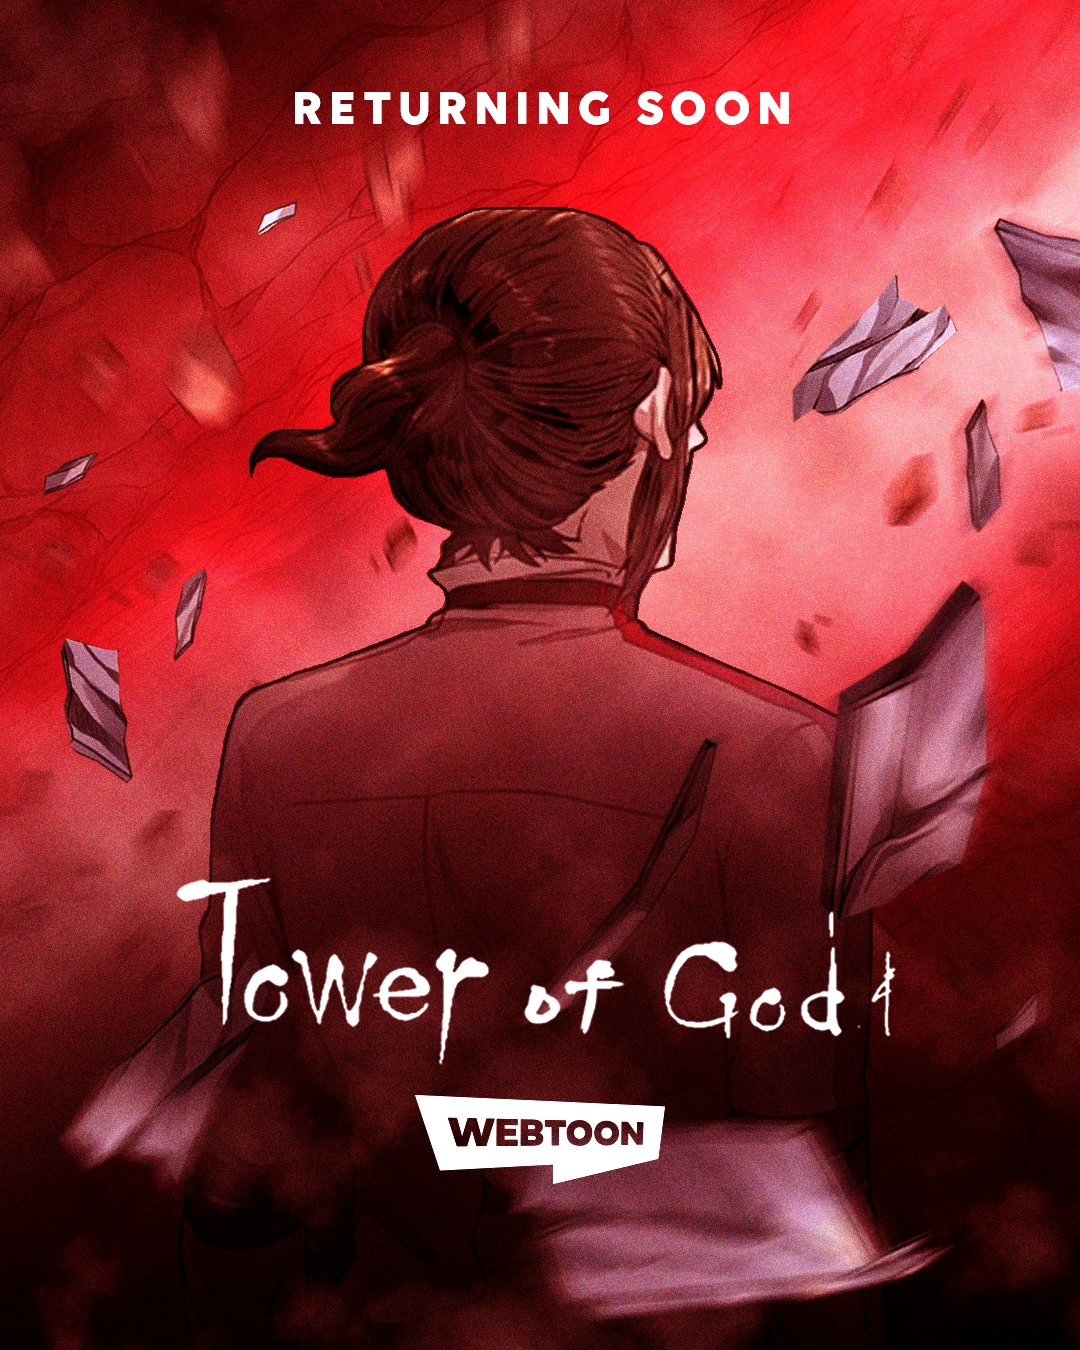 Tower of God return soon